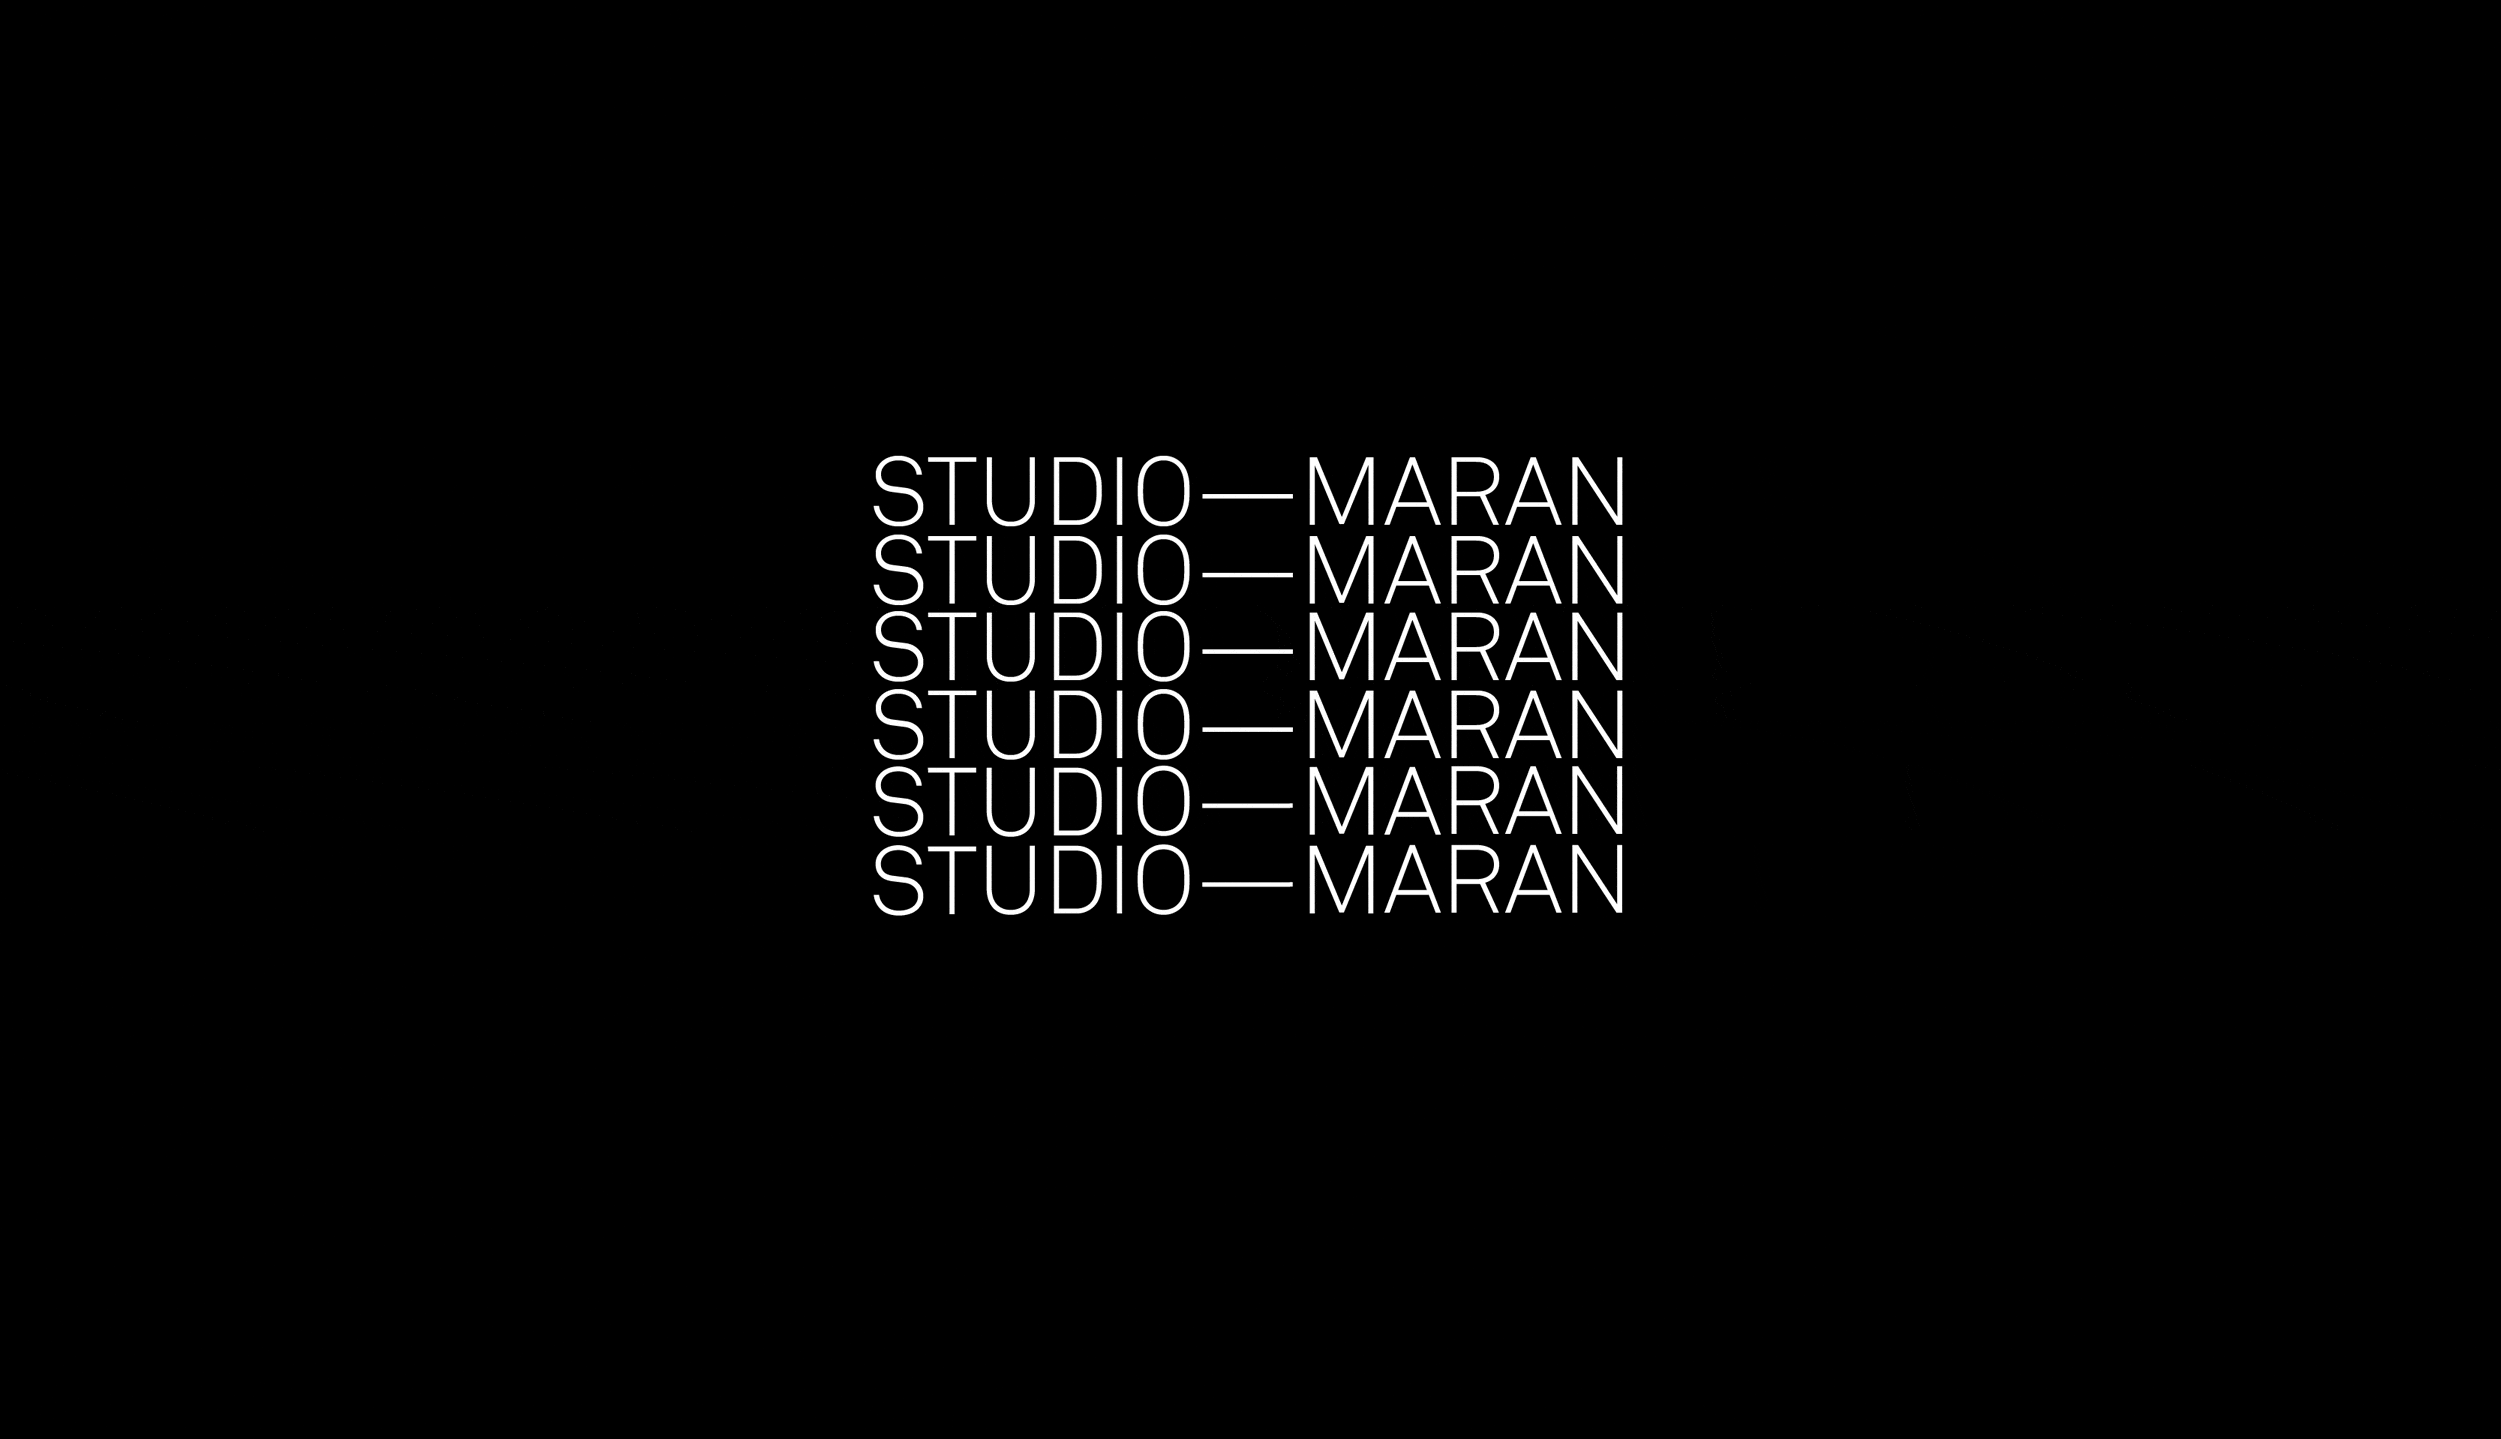 Studio-Maran Animation